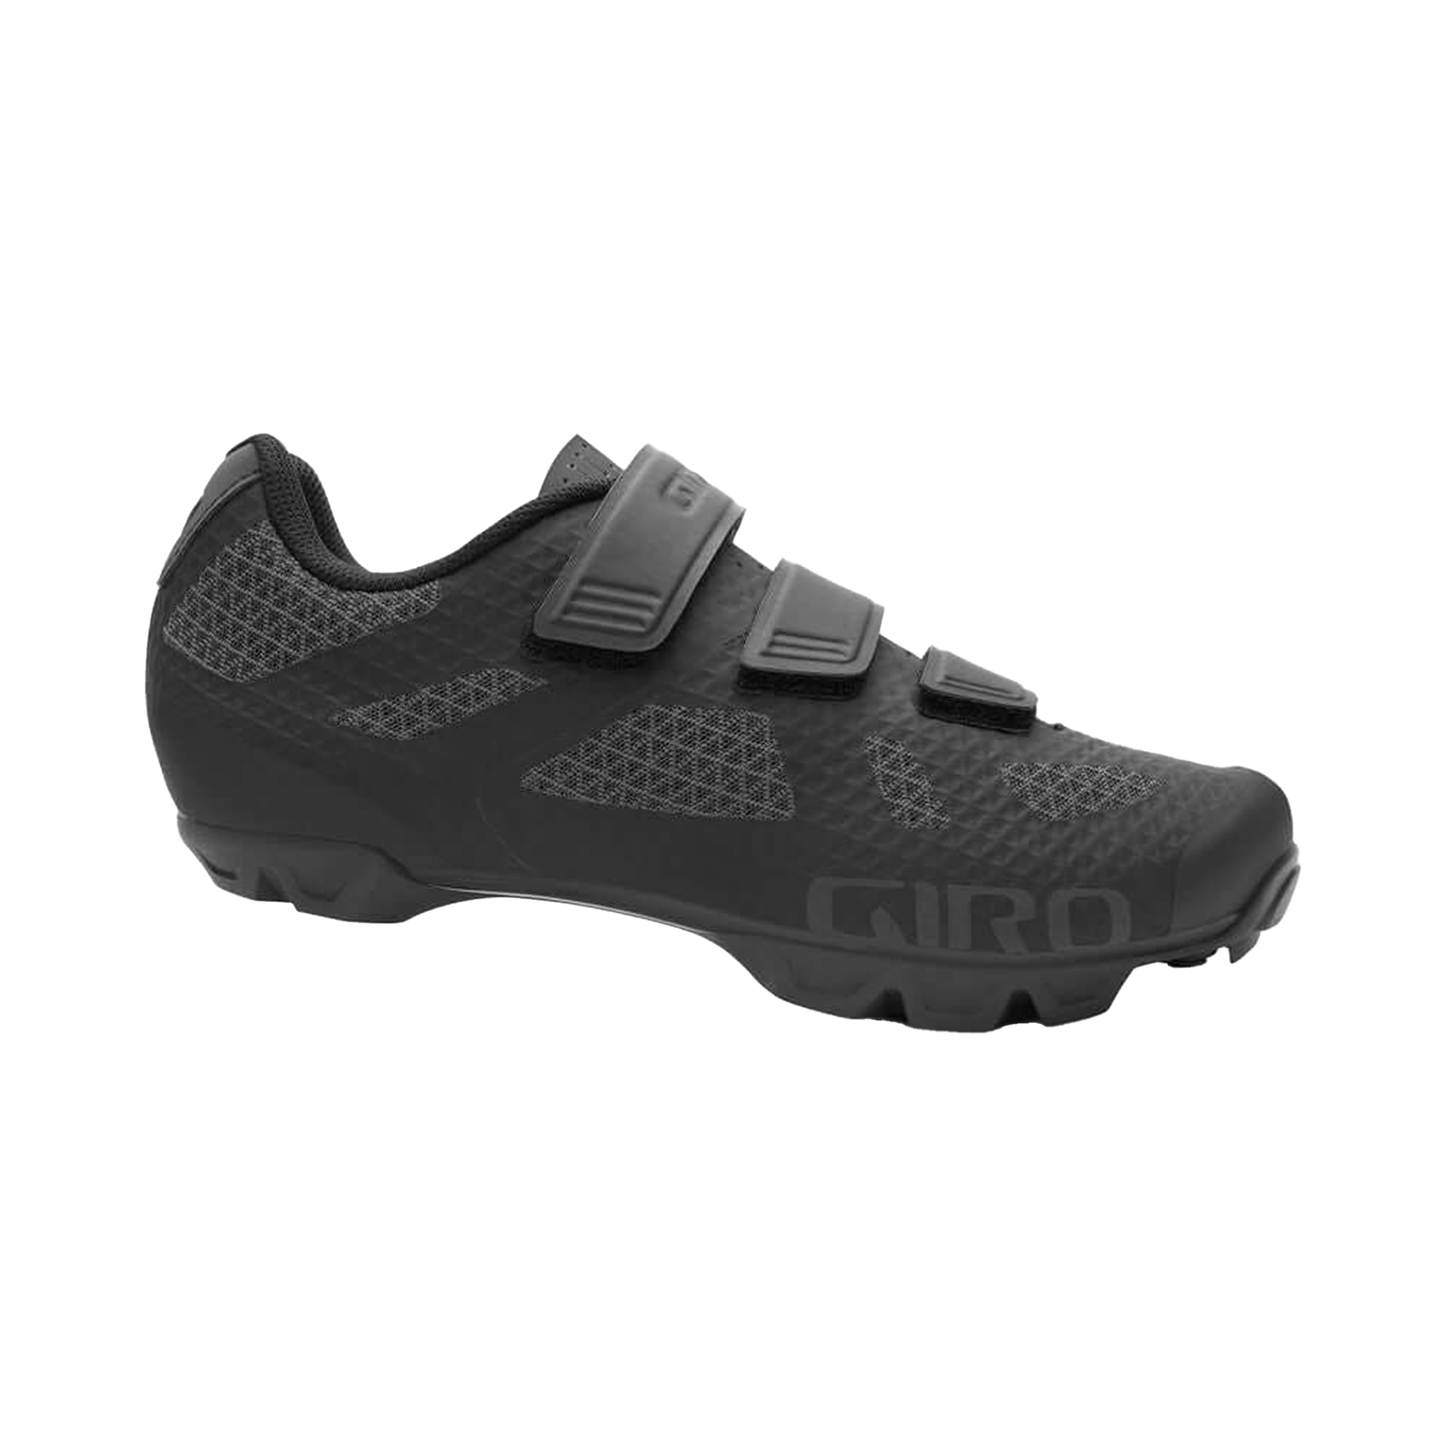 Giro Ranger Shoe - OpenBox Black Bike Shoes